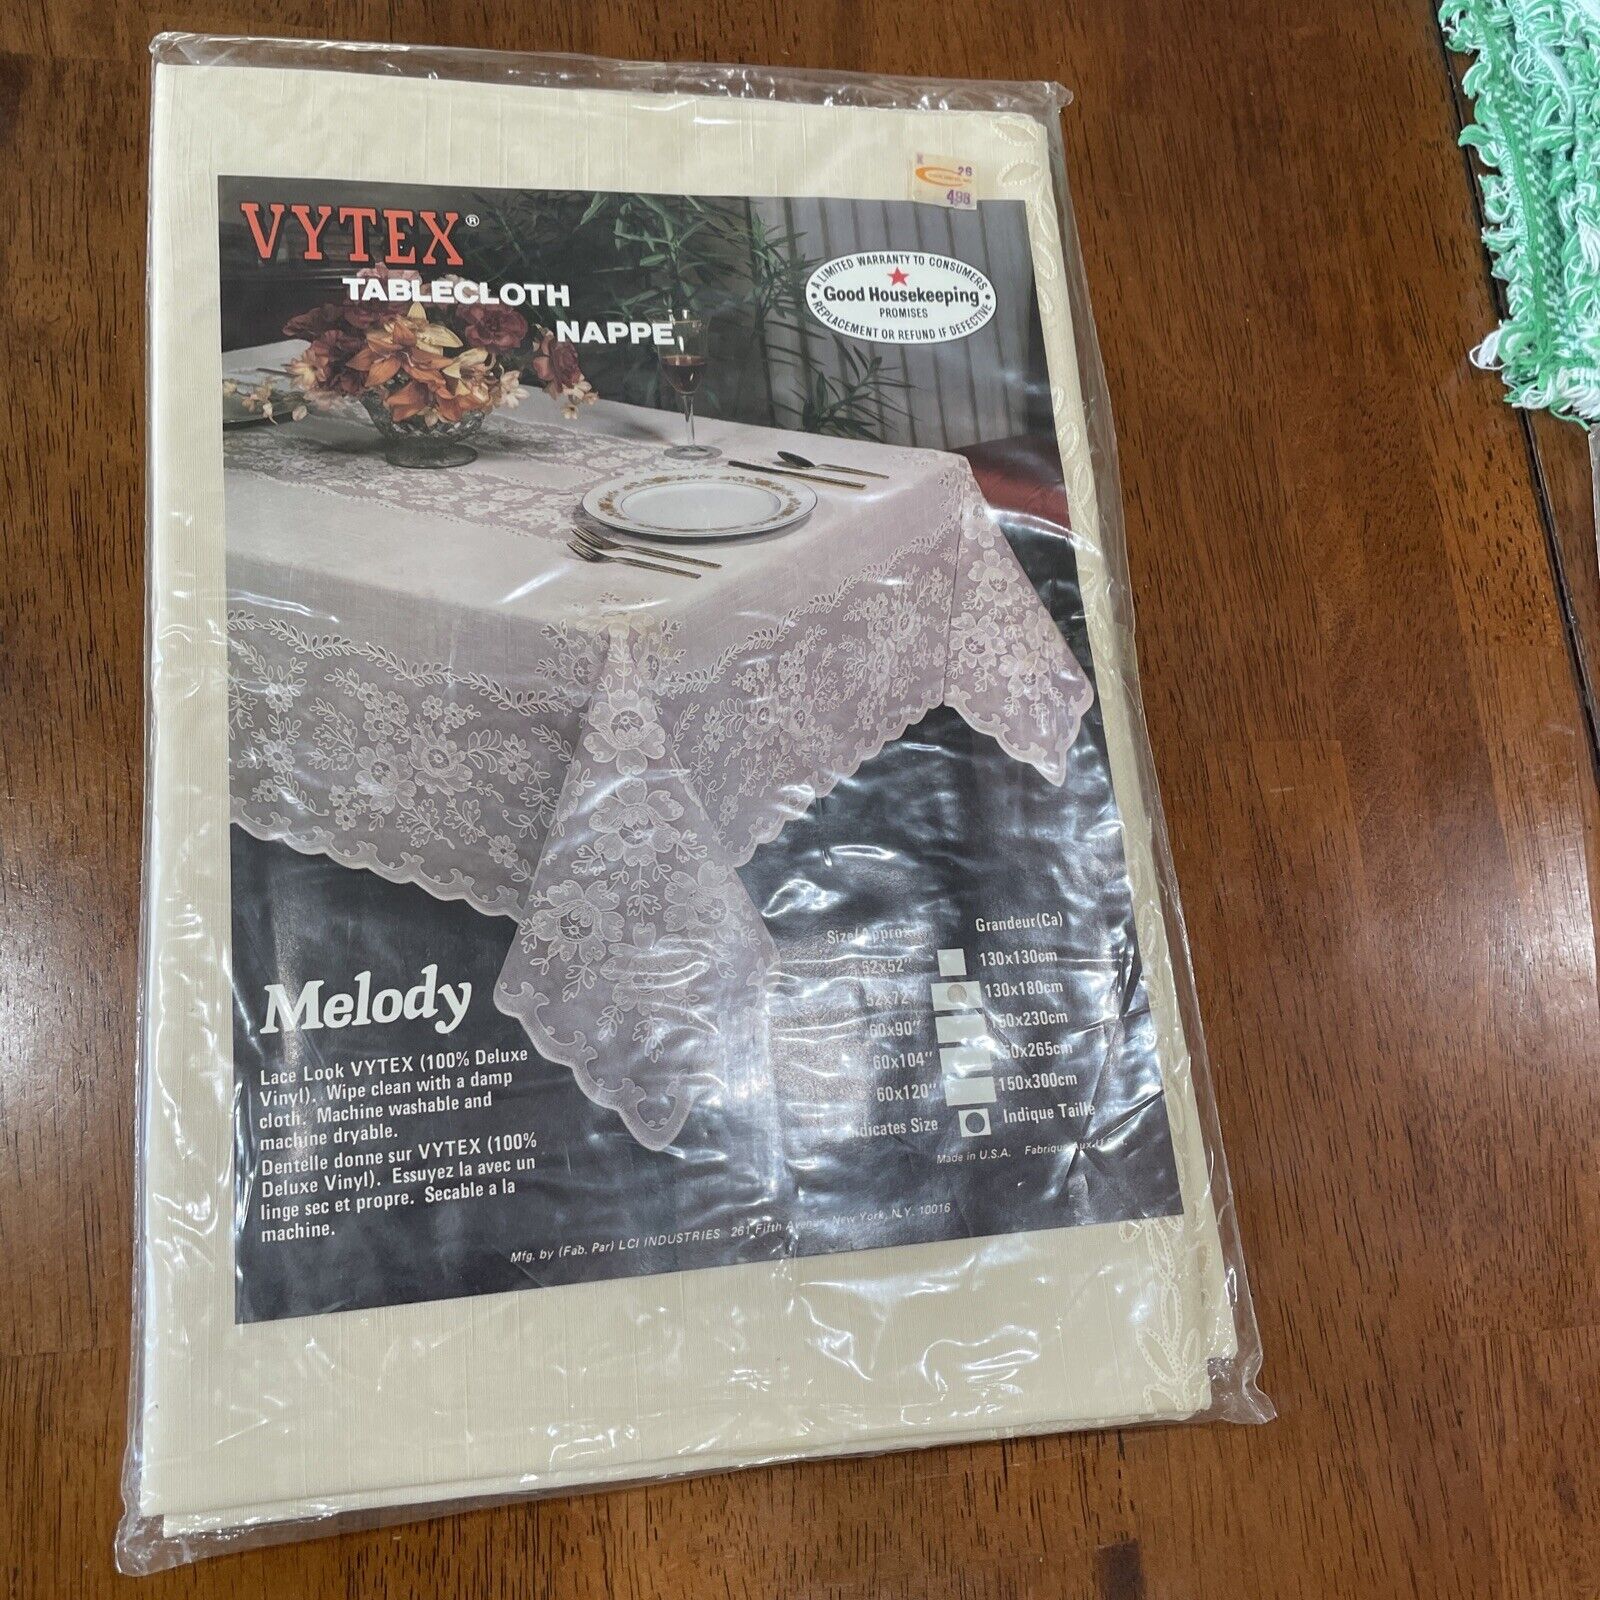 Vintage NOS Vytex Tablecloth Nappe- Lace Look Vinyl Oval 52 X 72” Melody